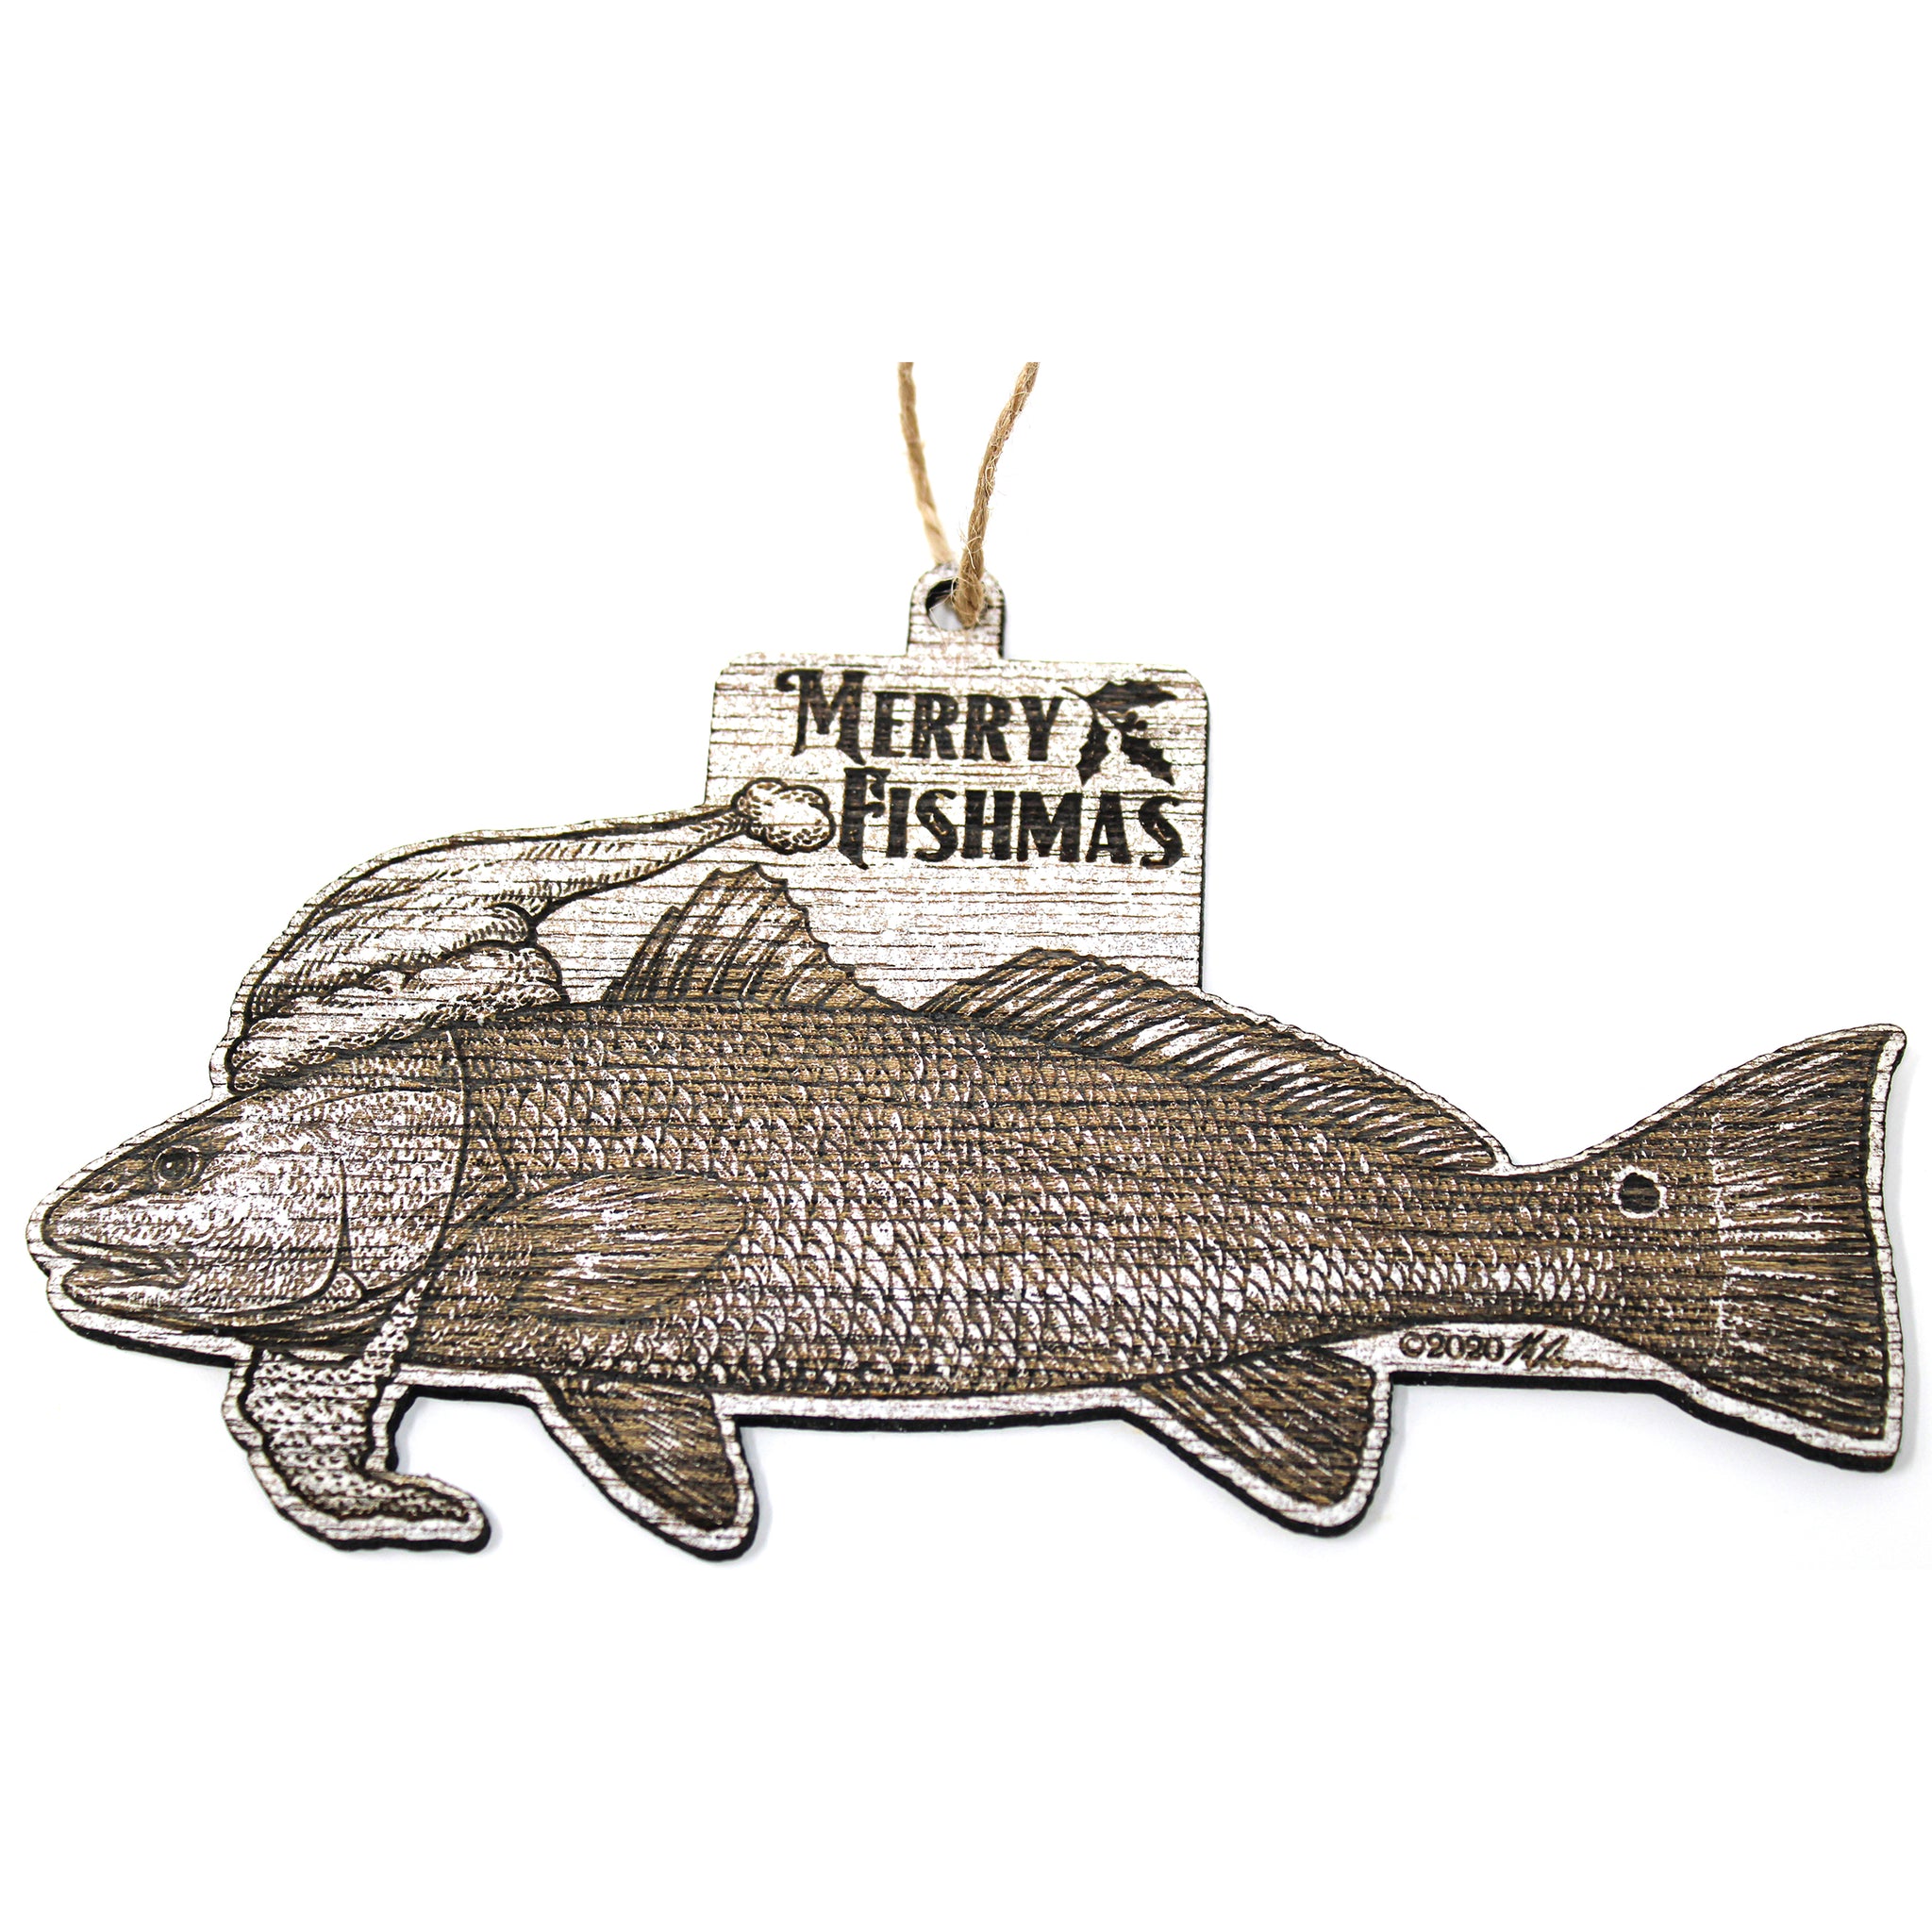 Wood Christmas Ornaments - Redfish Fishmas Ornaments